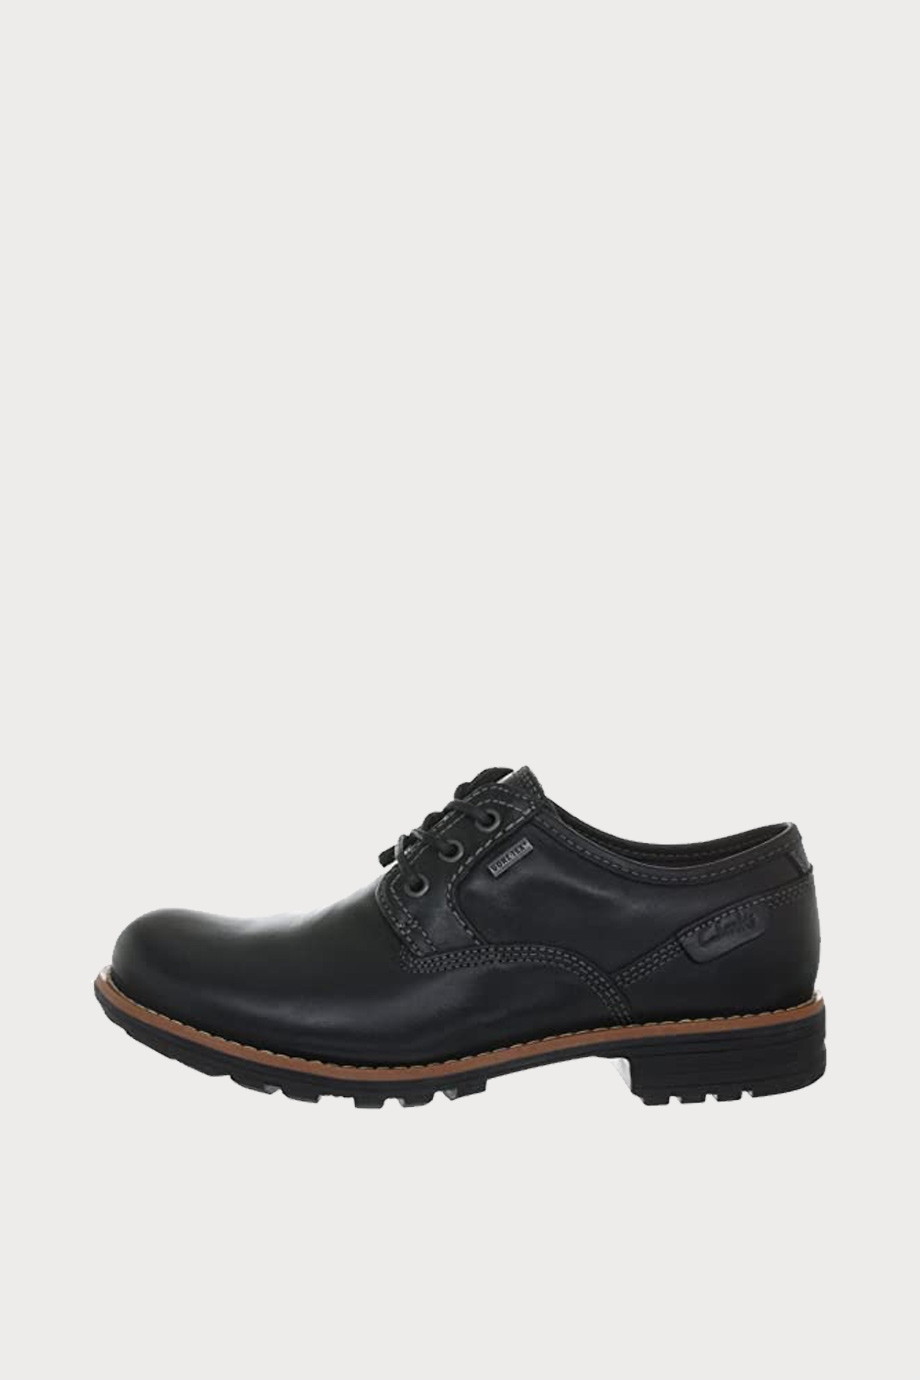 spiridoula metheniti shoes xalkida p midford lo gtx black leather clarks 4